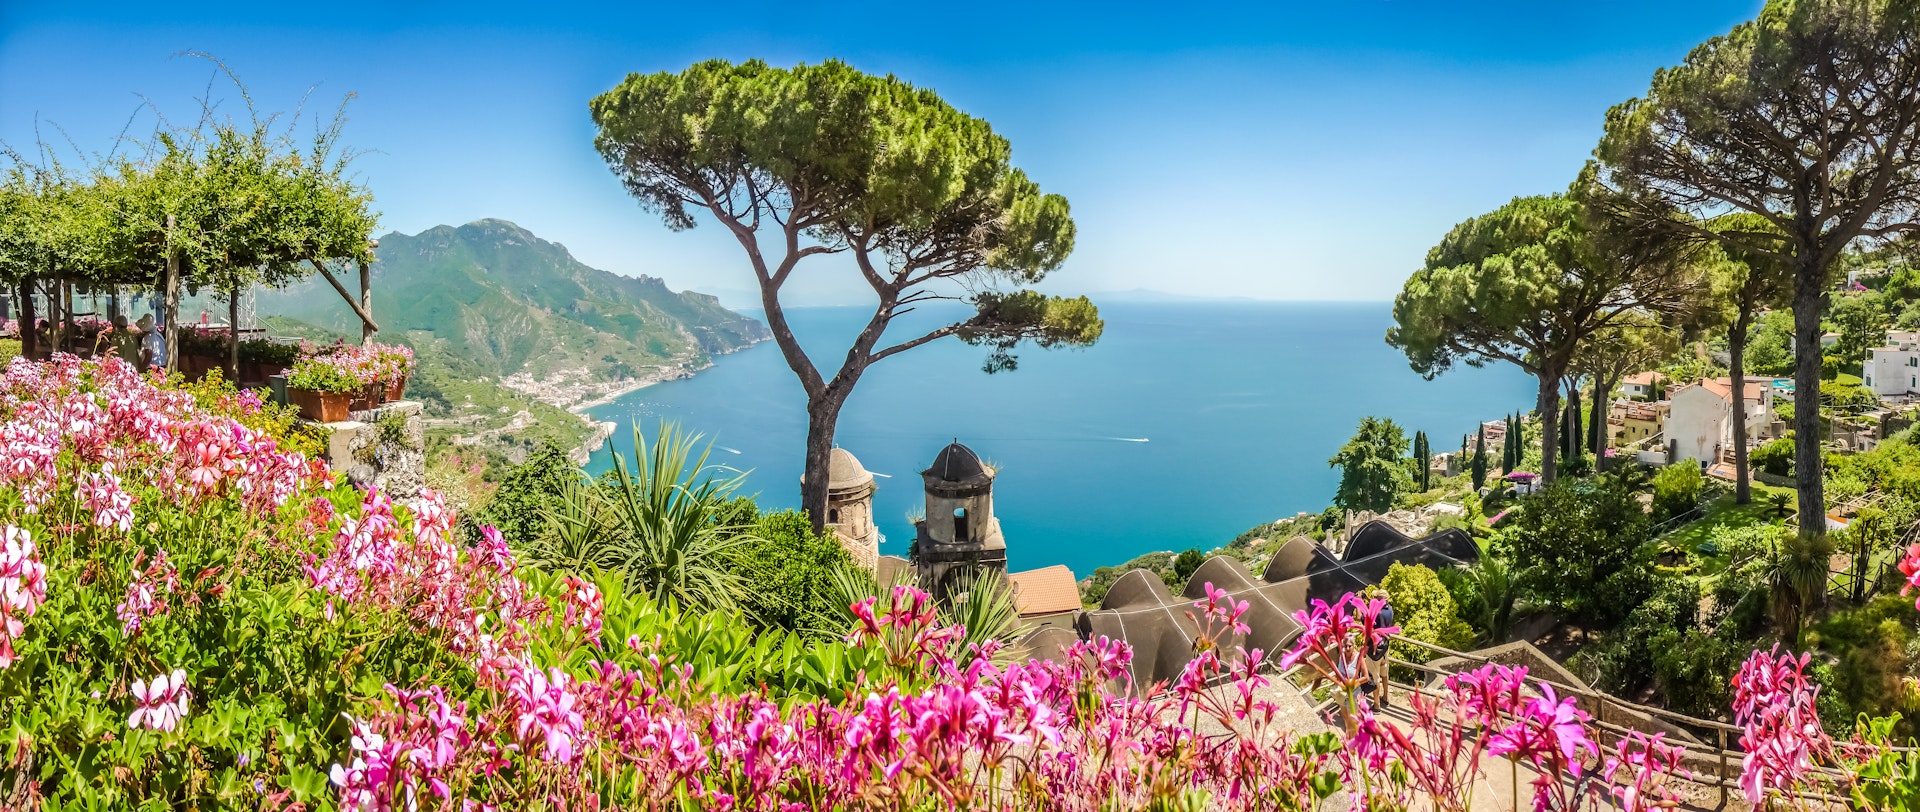 Scenic picture-postcard view of famous Amalfi Coast with Gulf of Salerno from Villa Rufolo gardens in Ravello, Campania,